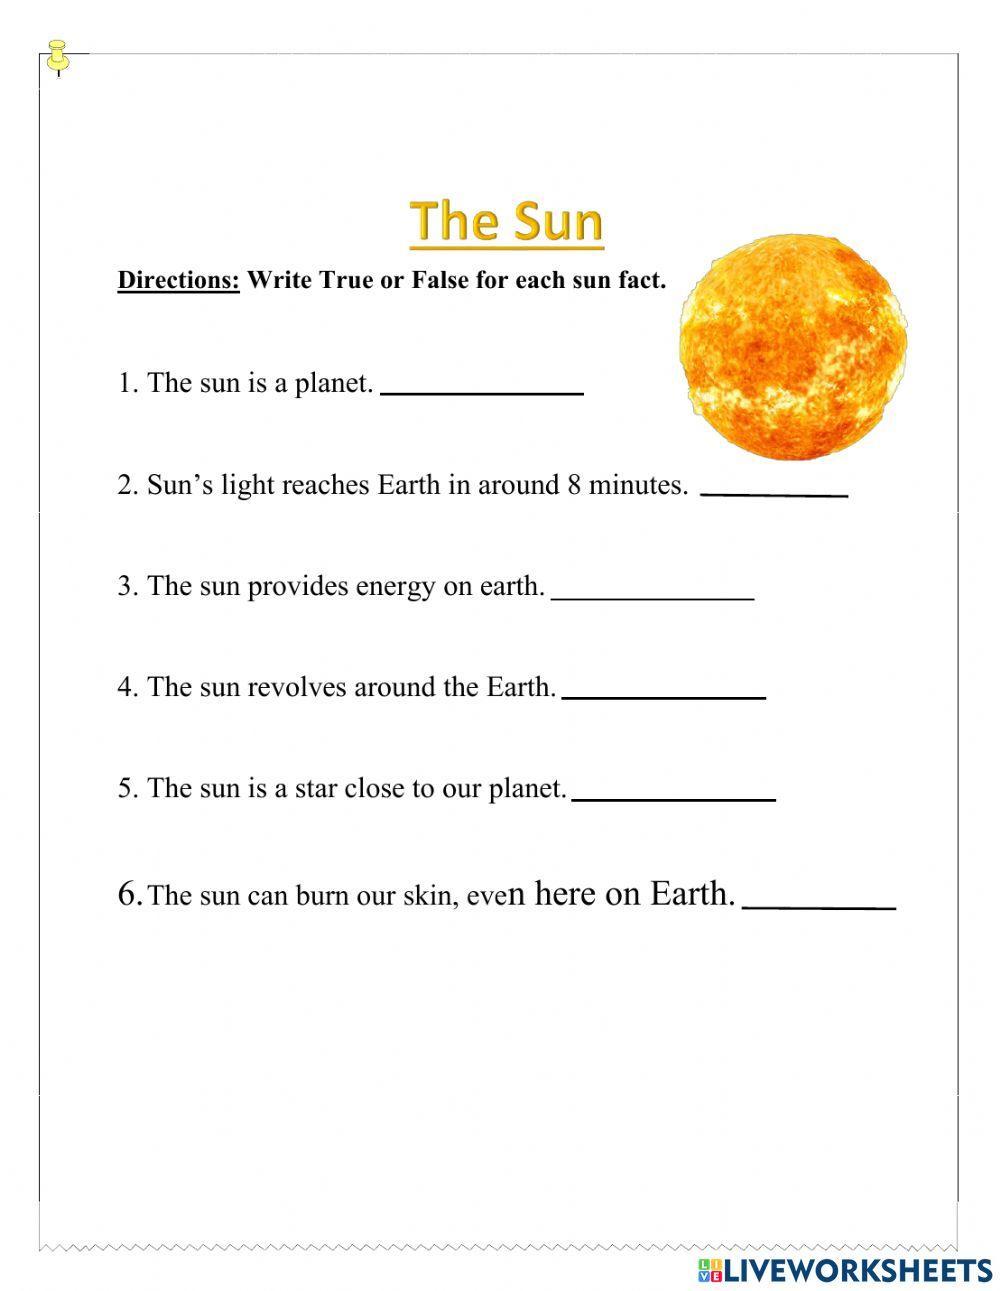 The Sun Live Worksheet